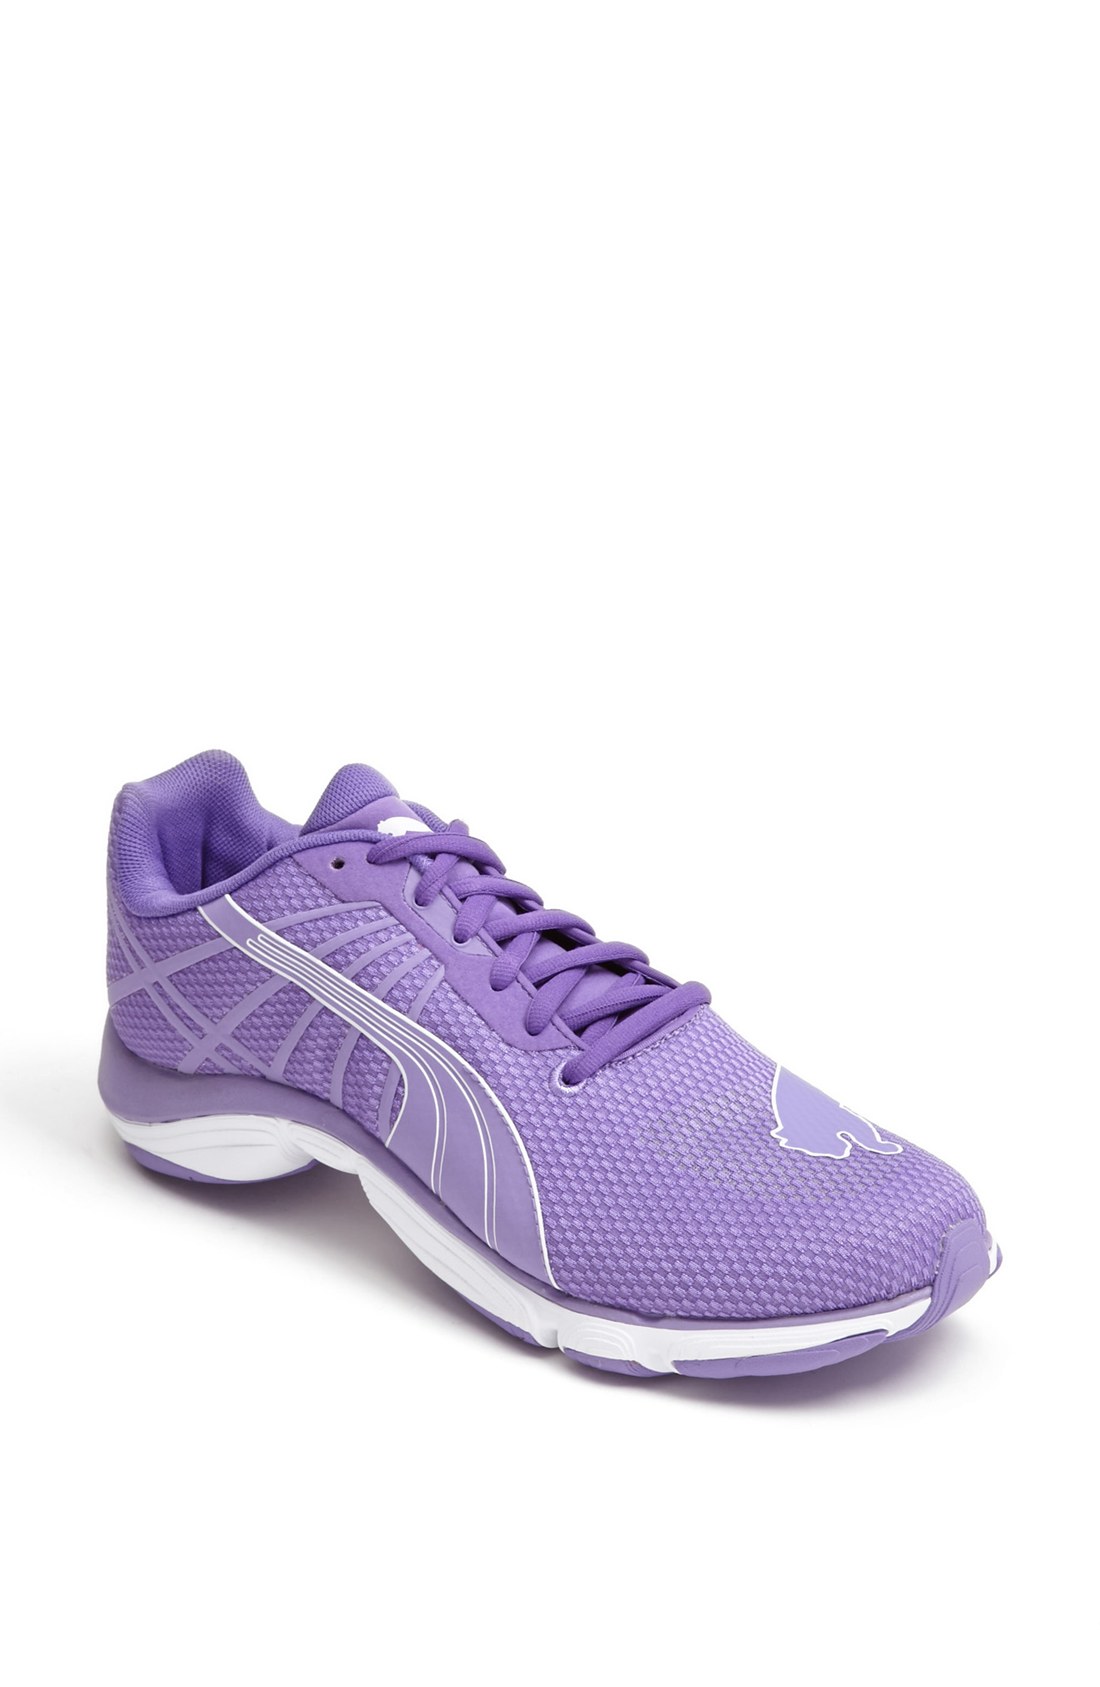 Puma Mobium Elite Glow Running Shoe in Purple (Fluo Purple